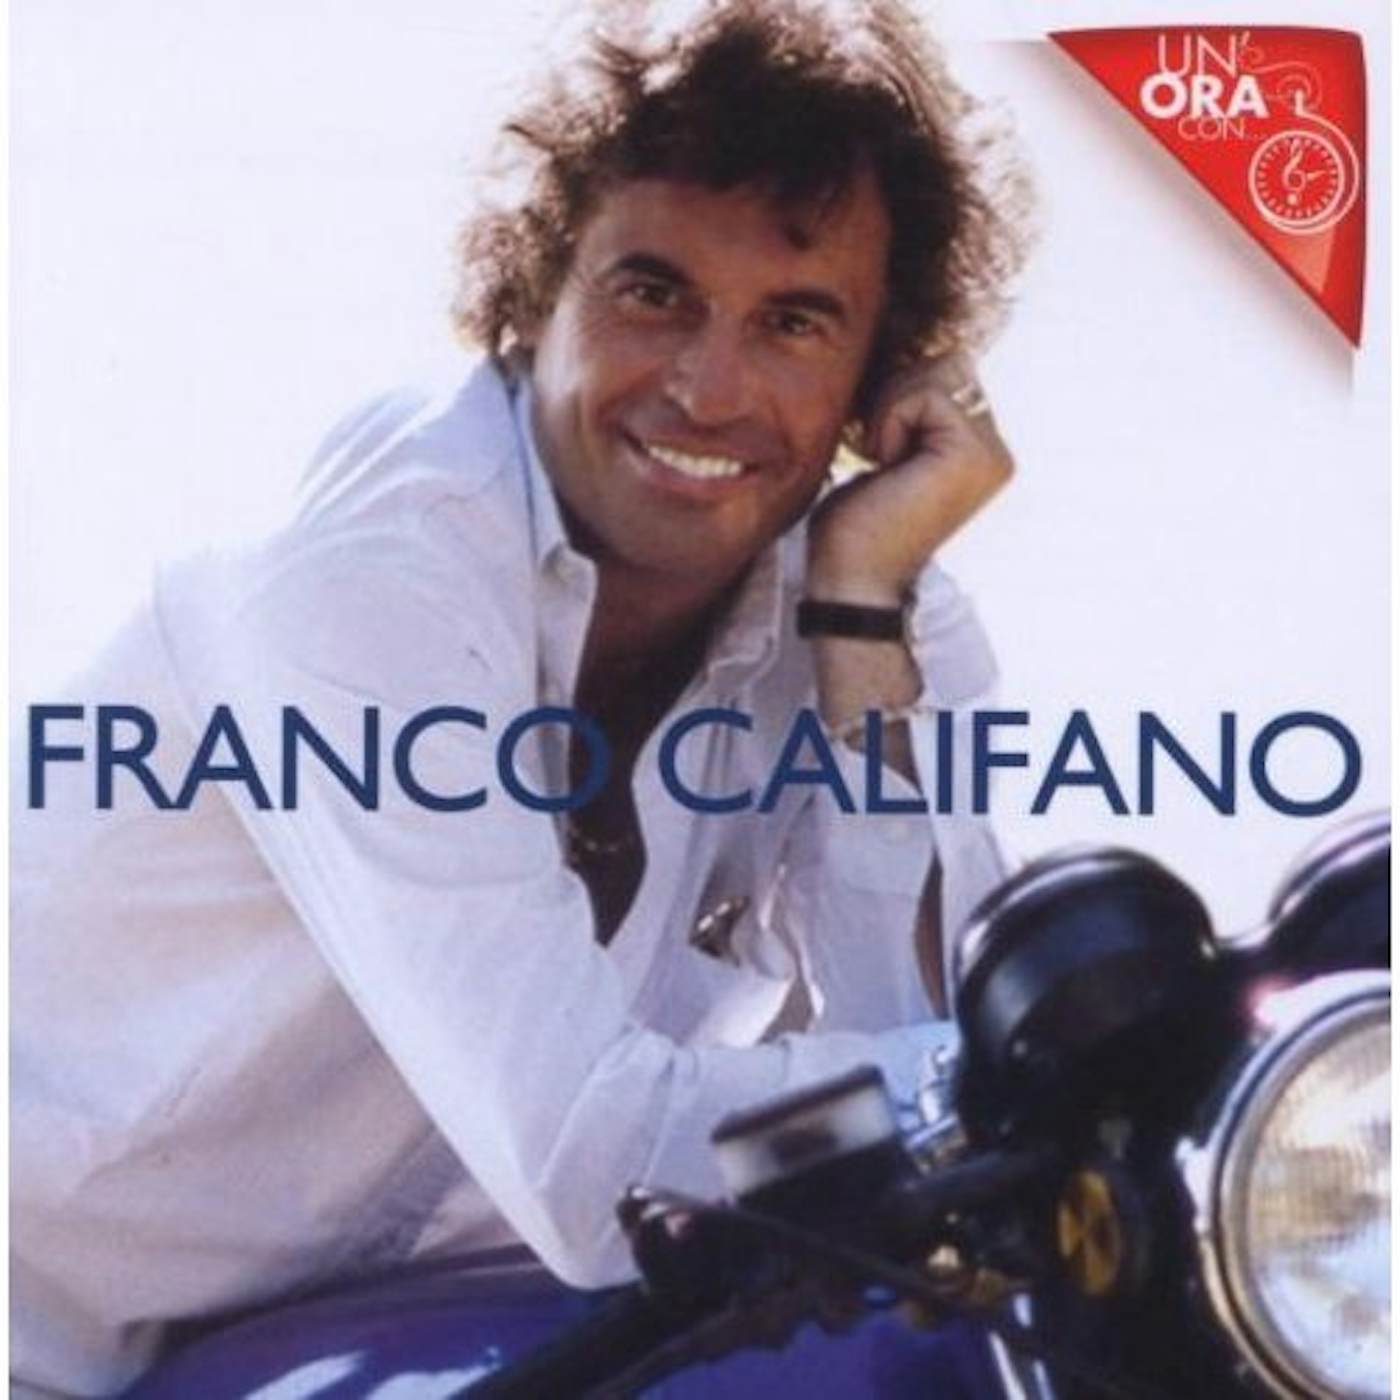 Franco Califano UN ORA CON CD